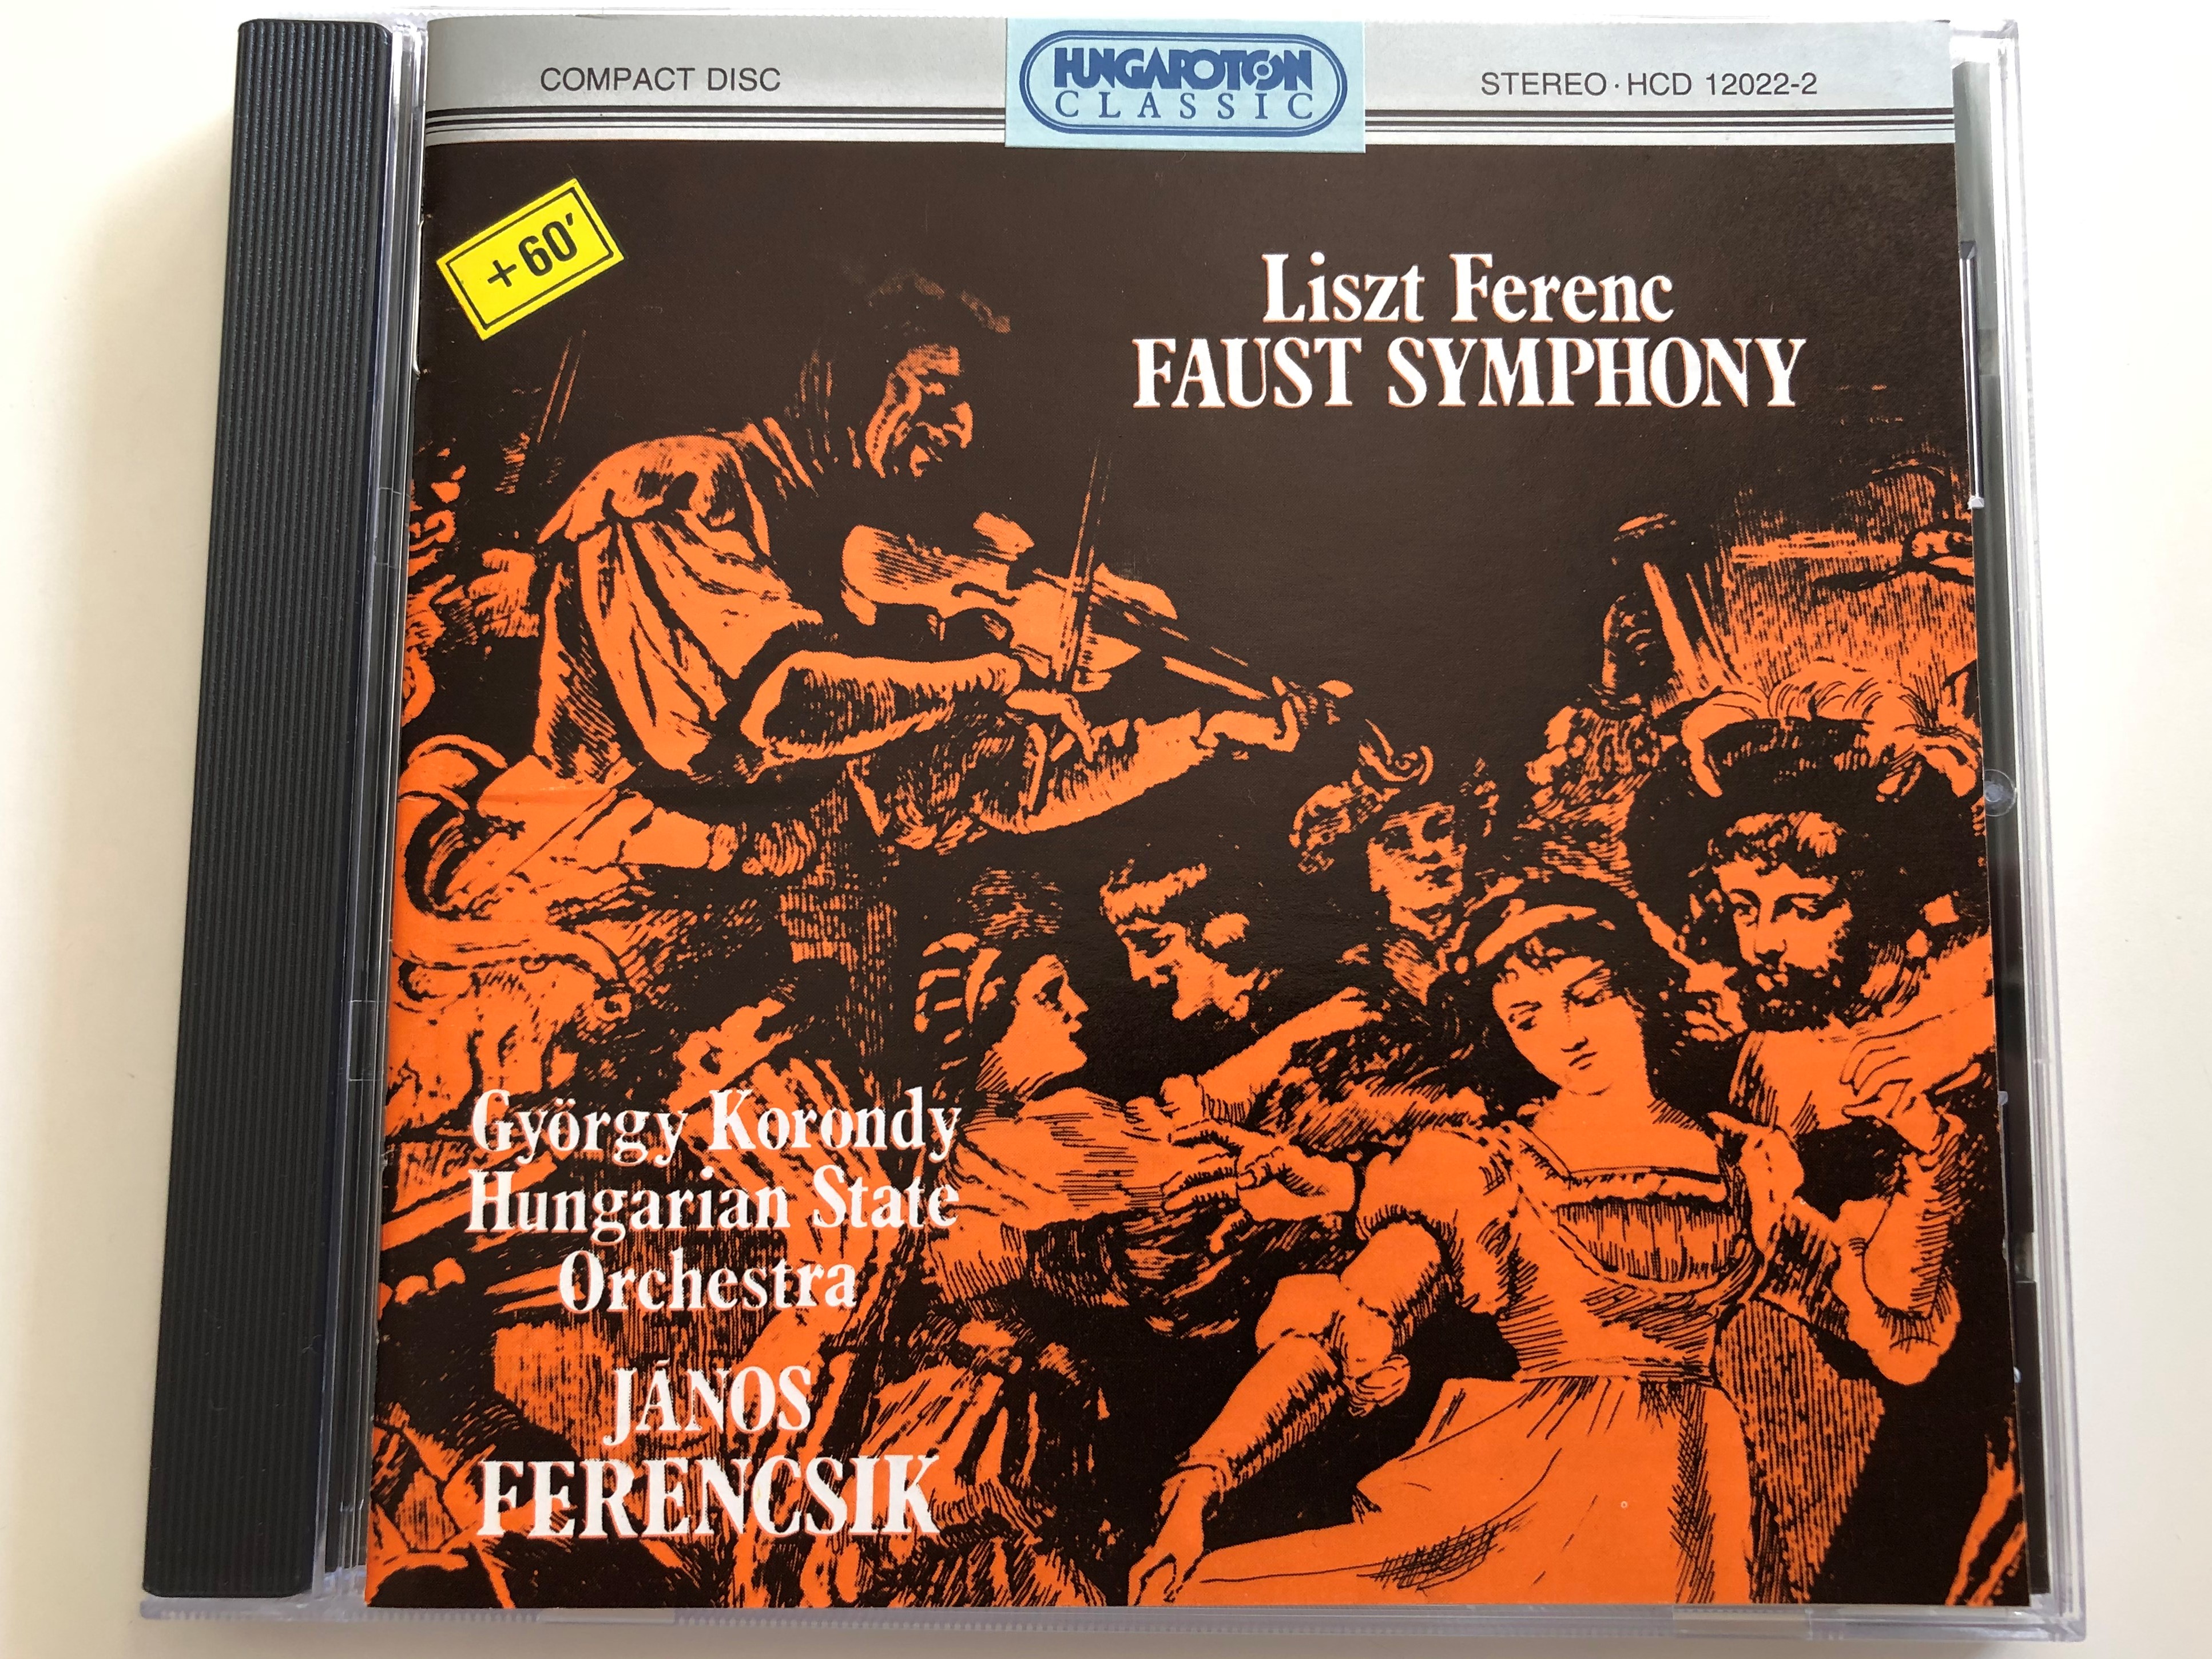 liszt-ferenc-faust-symphony-gyorgy-korondy-hungarian-state-orchestra-janos-ferencsik-hungaroton-classic-audio-cd-1994-stereo-hcd-12022-2-1-.jpg